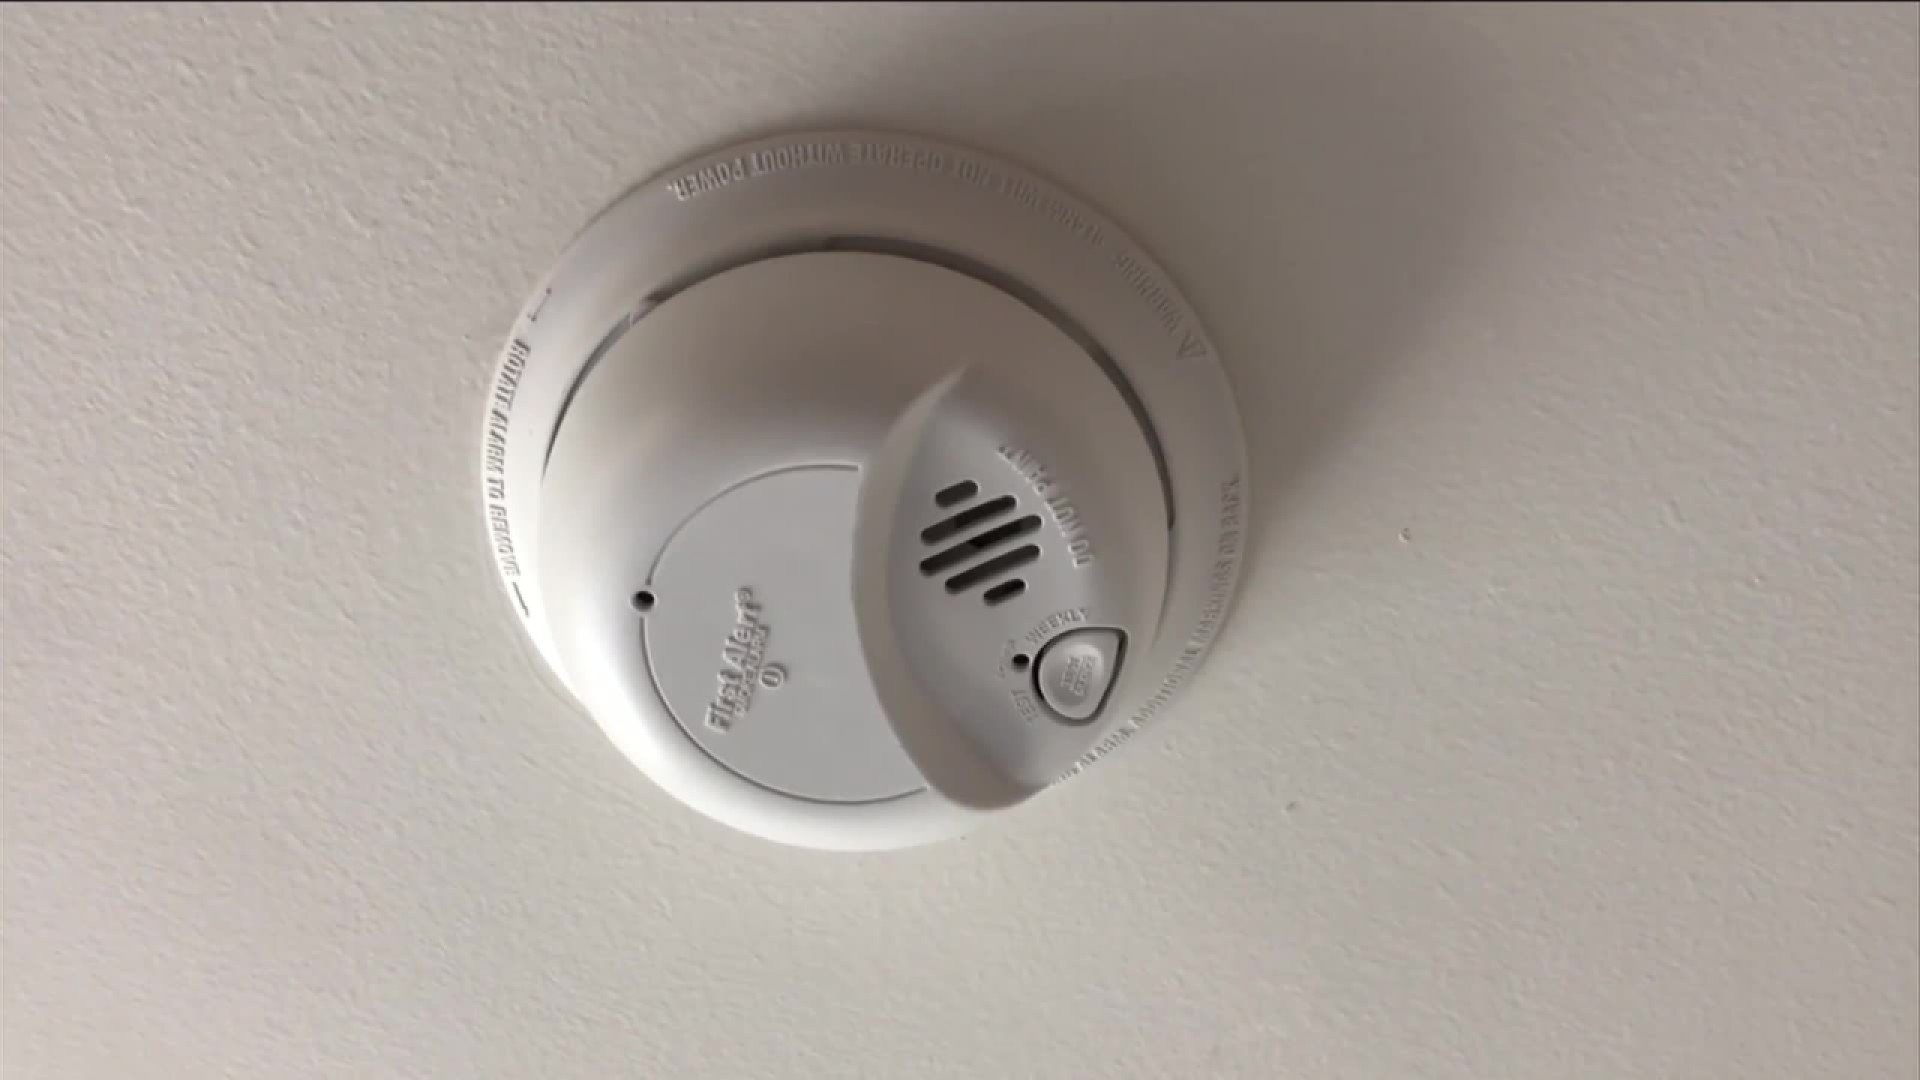 Why Do Smoke Detectors Give False Alarms?